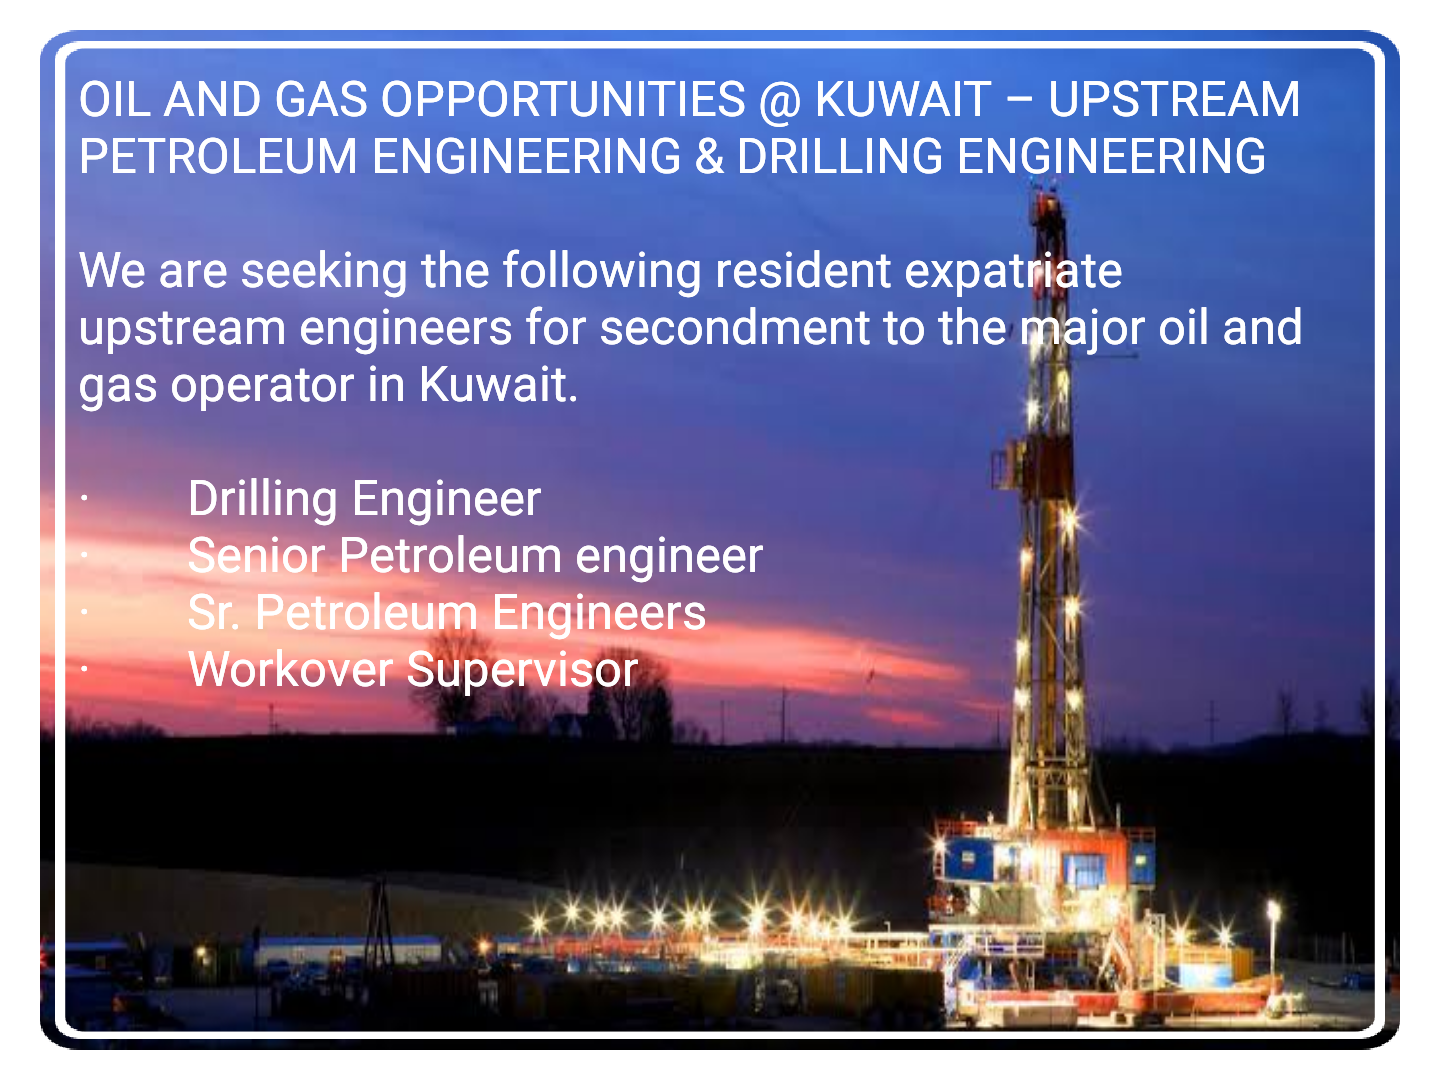 Drilling, Petroleum & Workover Engineer Jobs